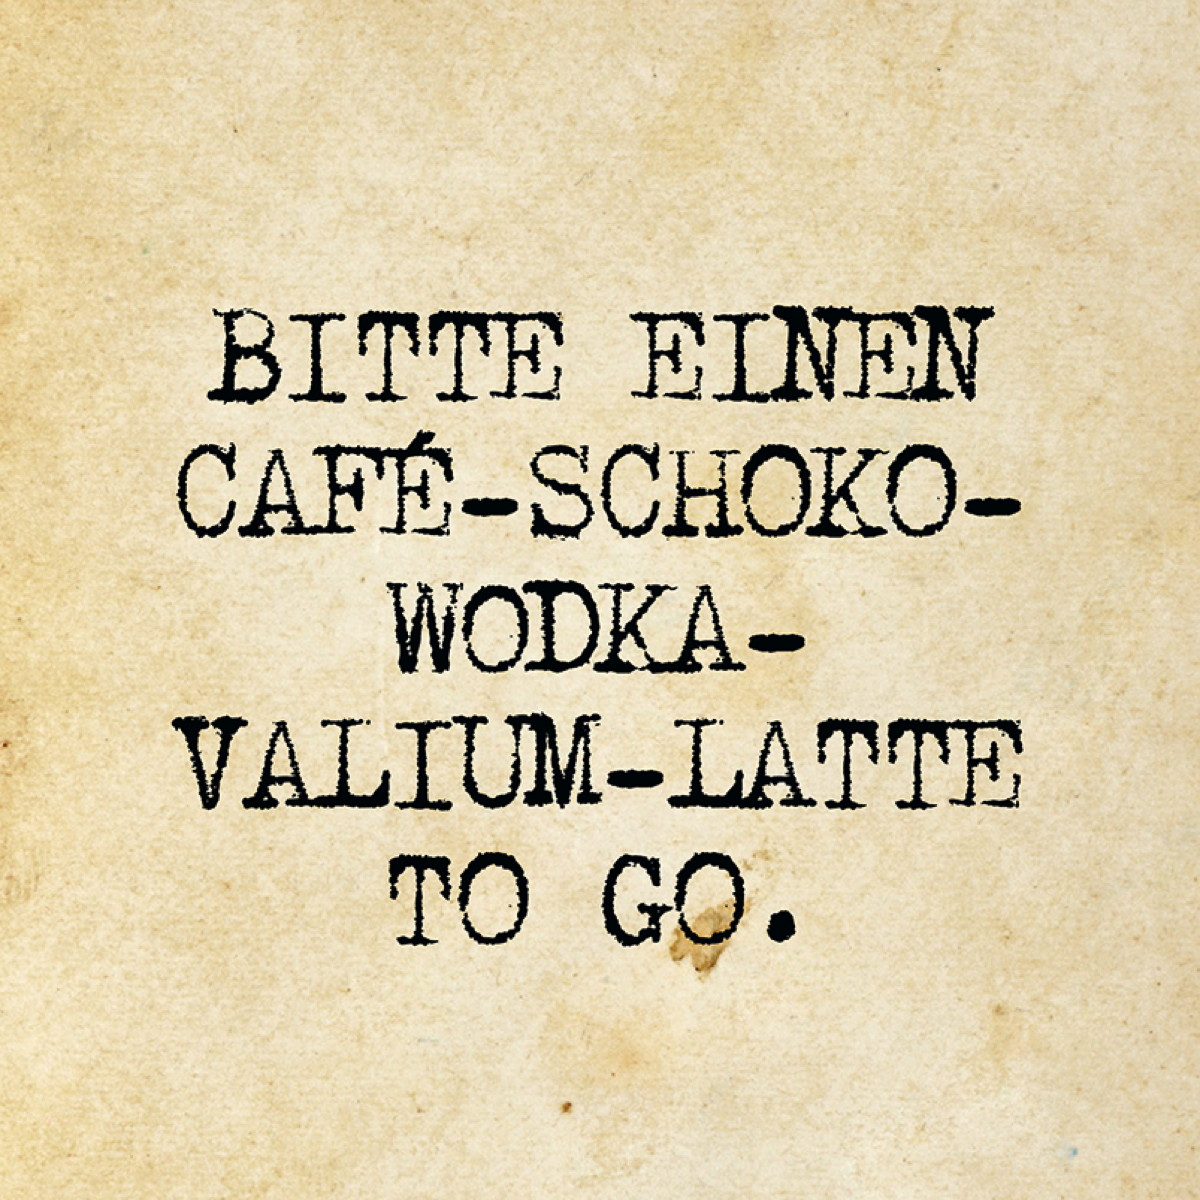 Café-Schoko-Wodka-Valium-Latte